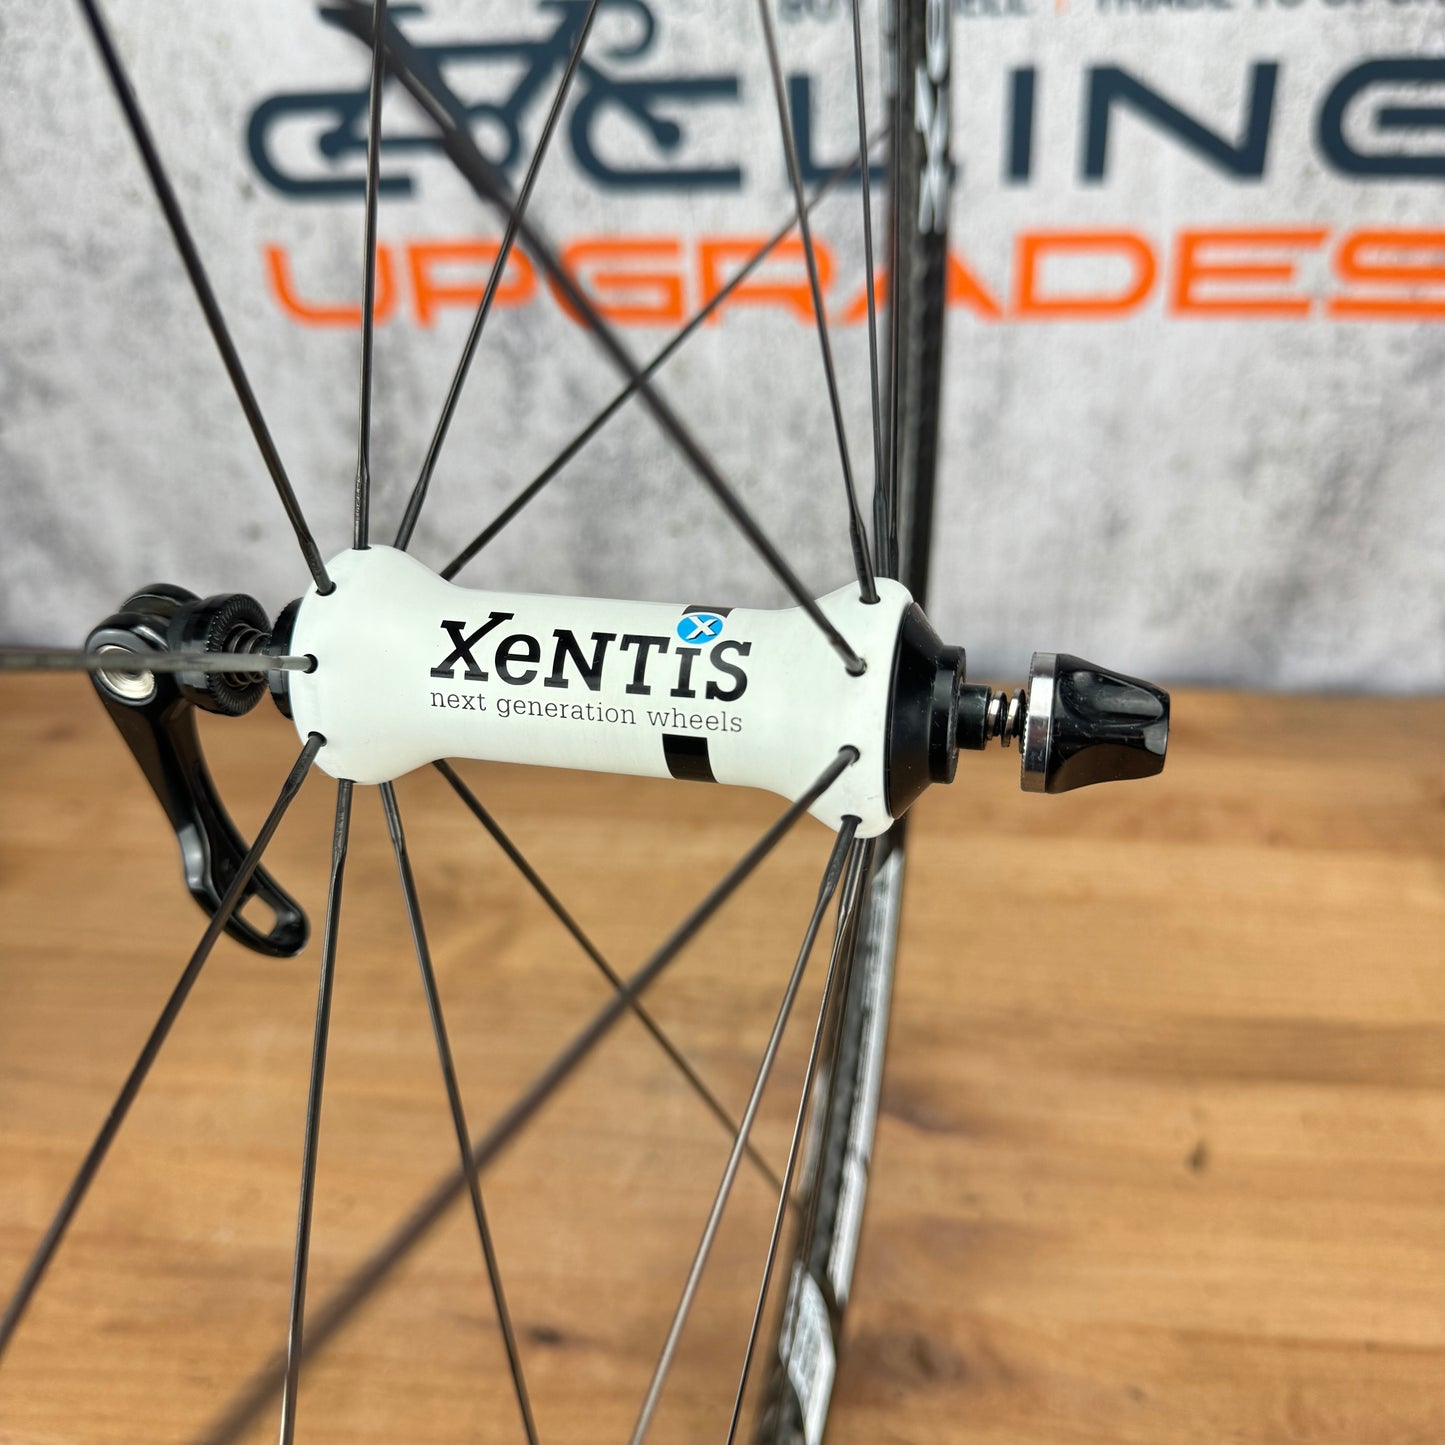 Light! Xentis XBL 2.5 Carbon Clincher Rim Brake Road Bike Wheelset 700c 1260g